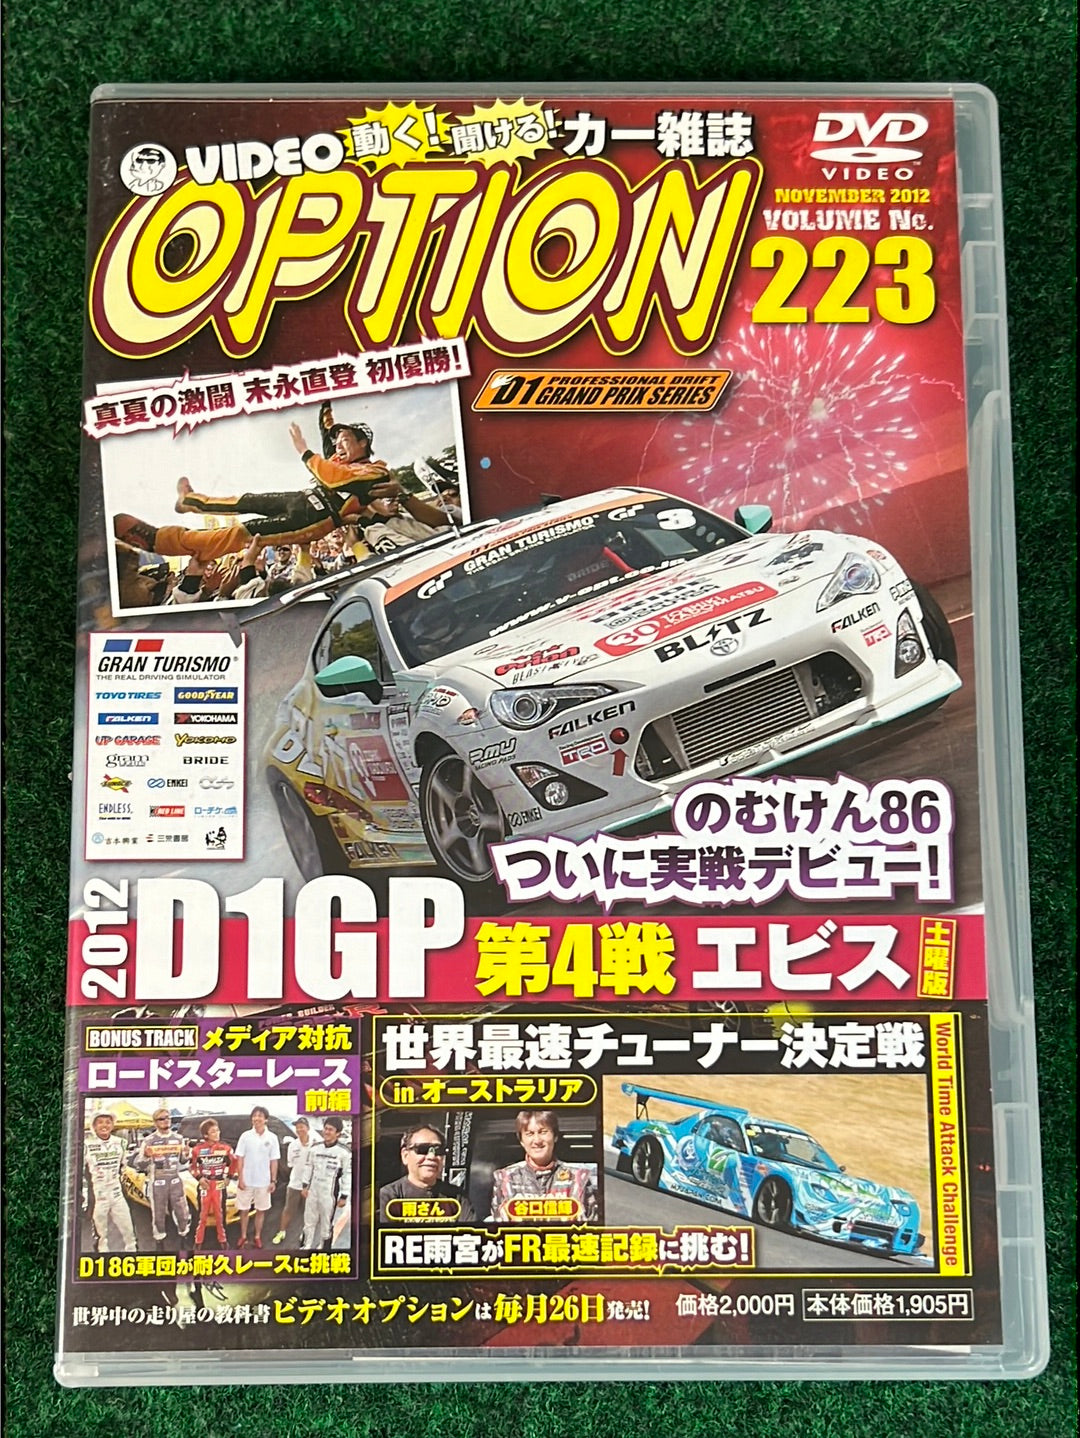 Option Video DVD - November 2012 Vol. 223